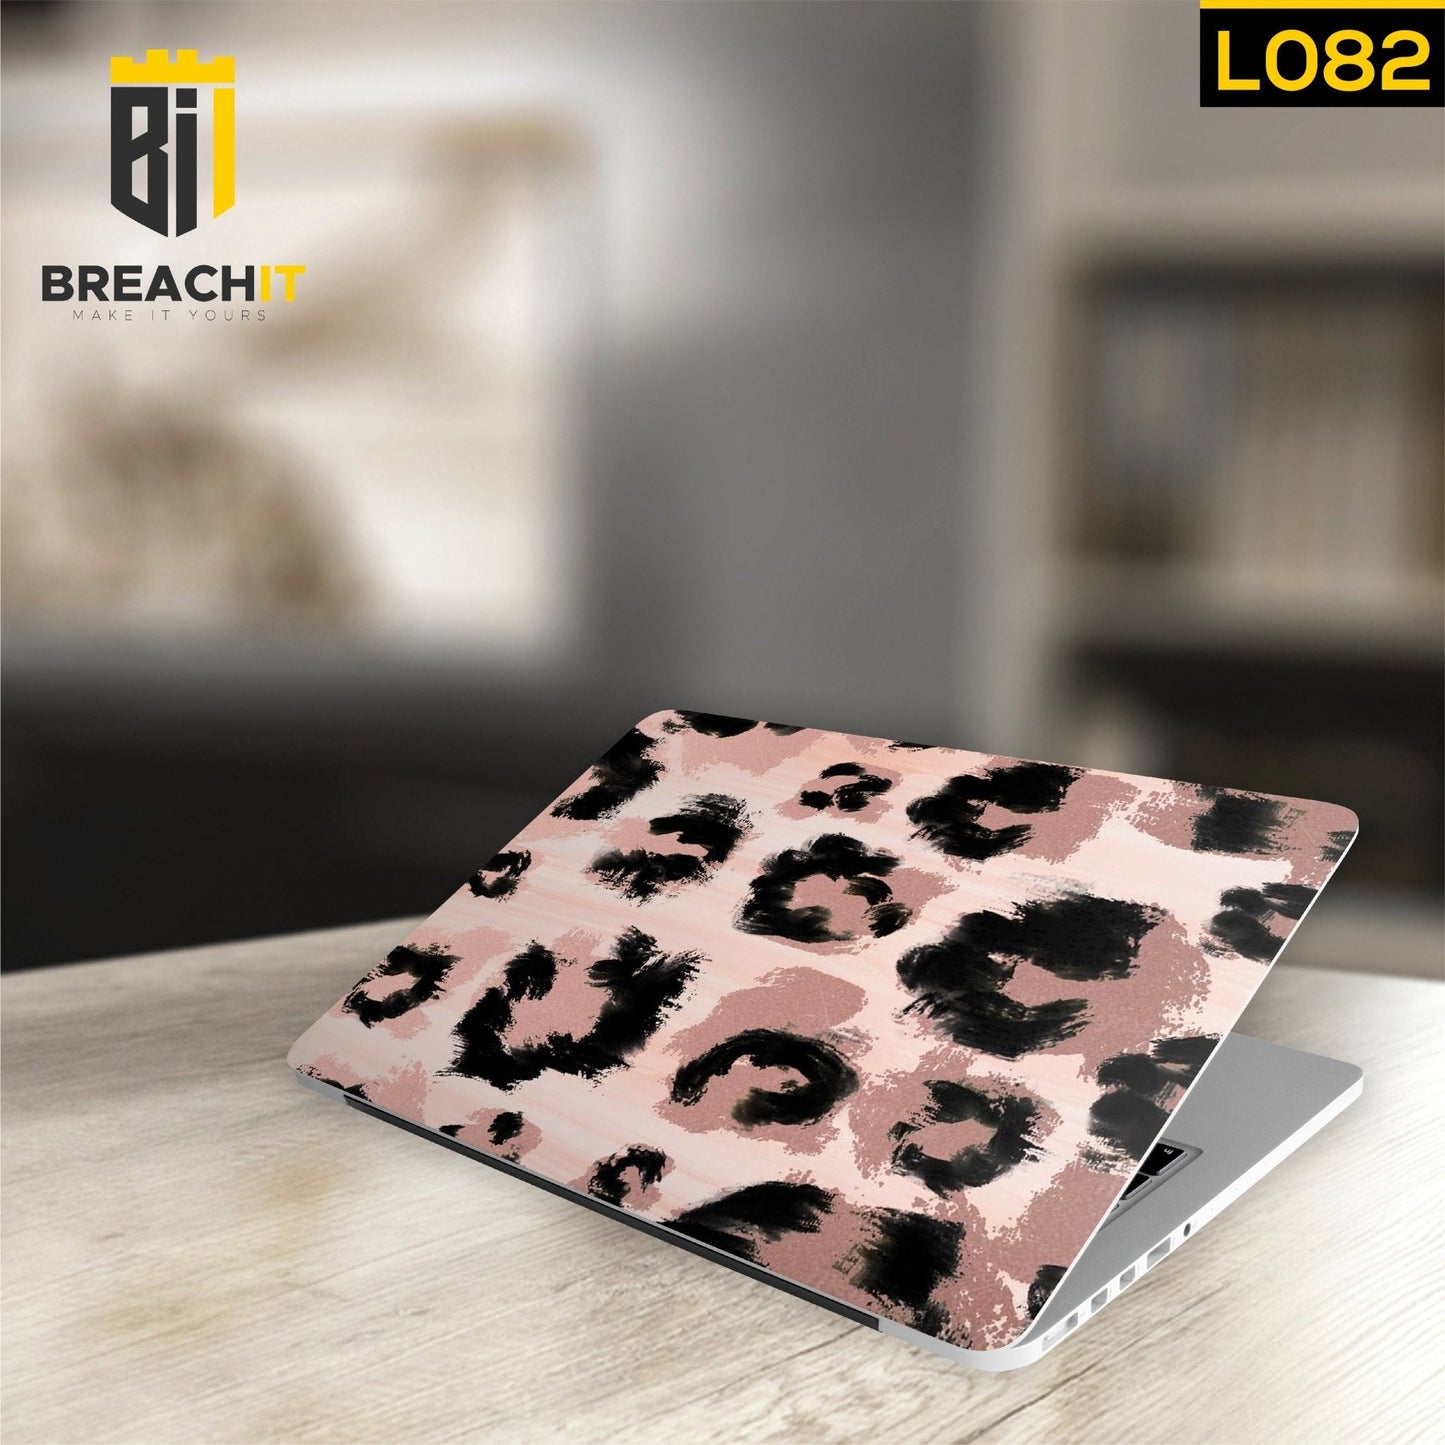 L082 Pink Laptop Skin - BREACHIT